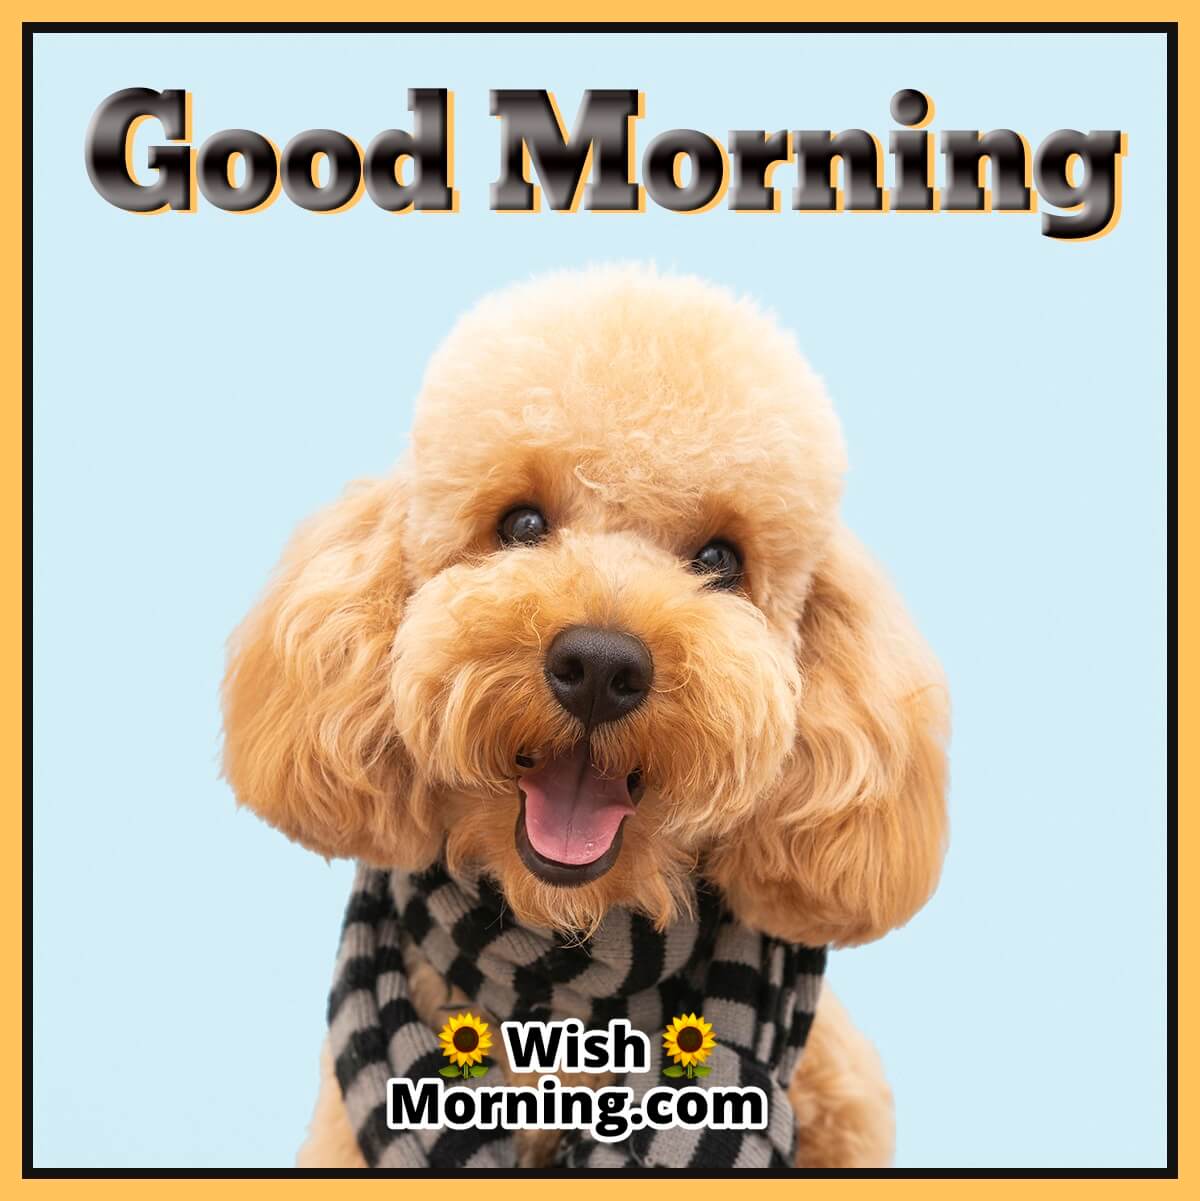 Good Morning – Puppy Image